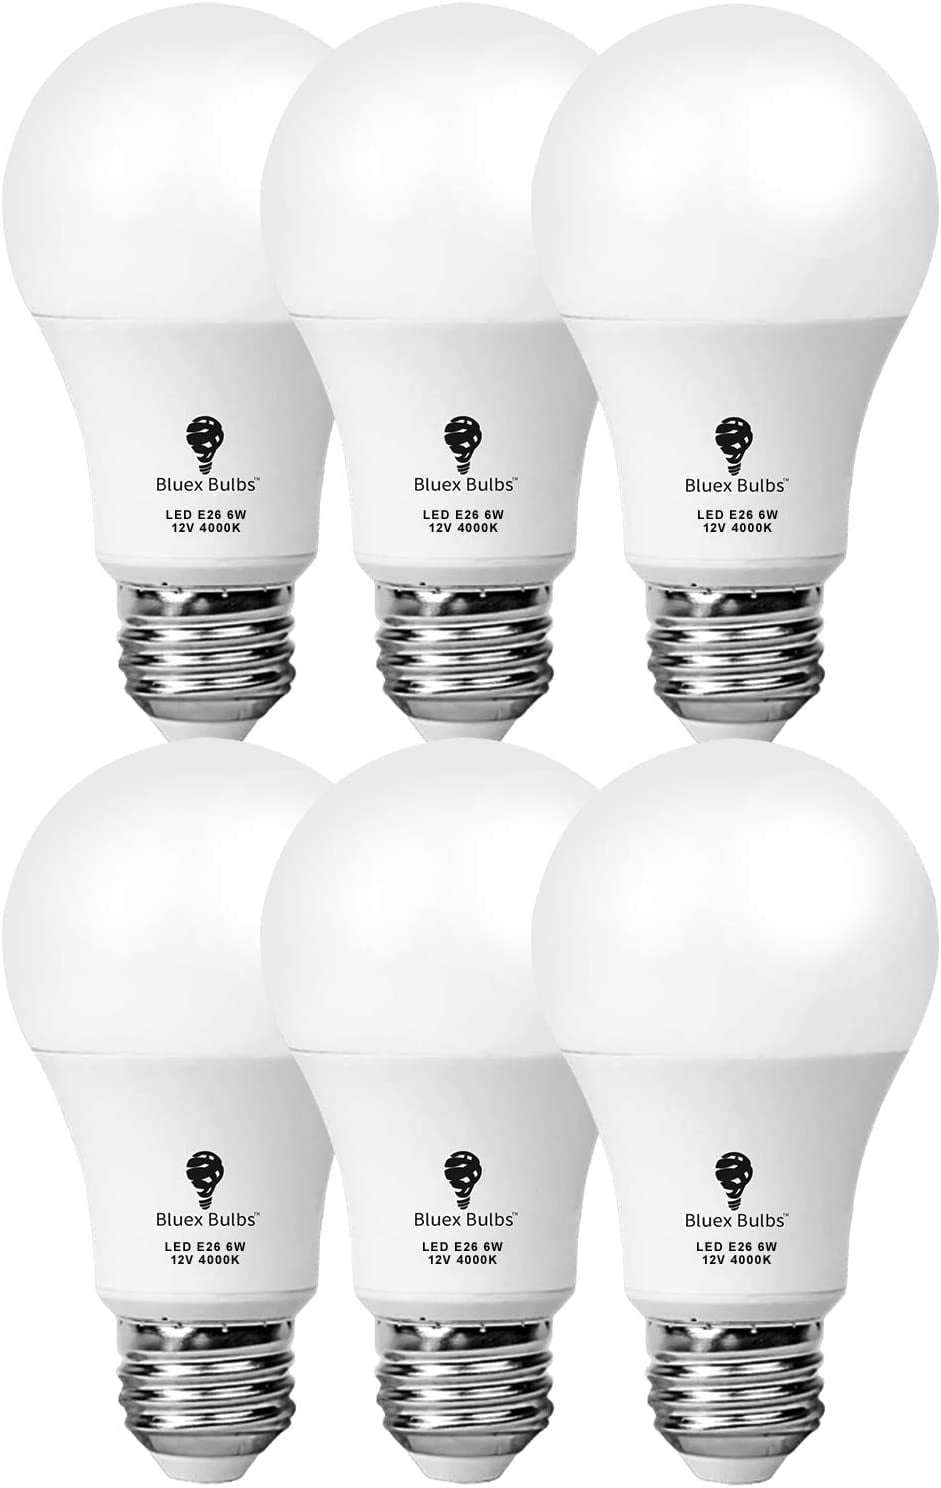 12 Volt Light Bulb 12V LED Bulb A19 6W 3000K Warm White E26 Low Voltage Light Bulbs 570lm (50Watt Equivalent) RV Camper Marine, Solar Battery System 6 Pack - Walmart.com